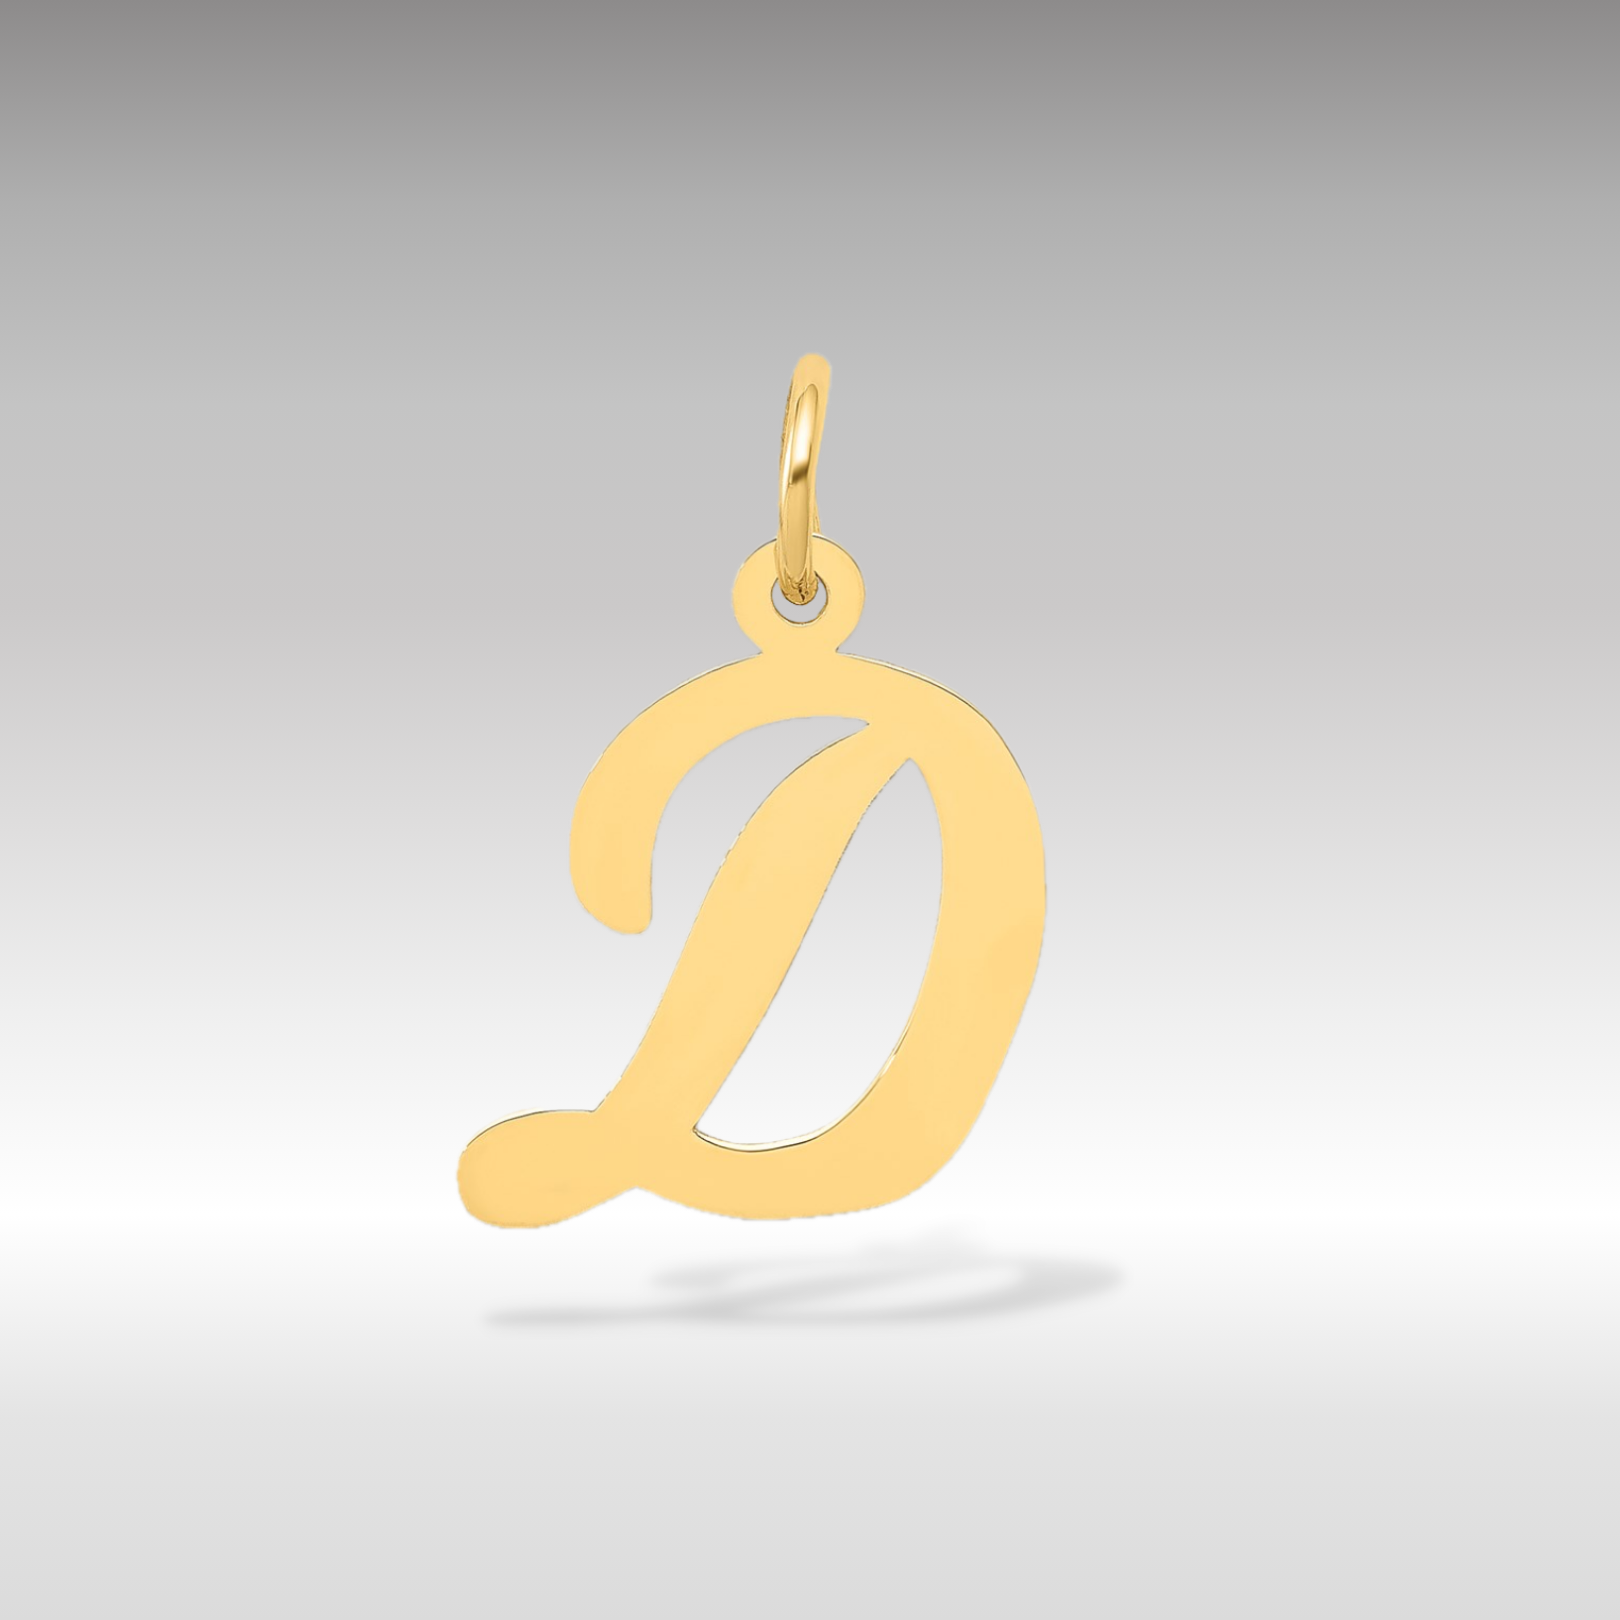 14K Gold Script Letter "D" Initial Pendant - Charlie & Co. Jewelry